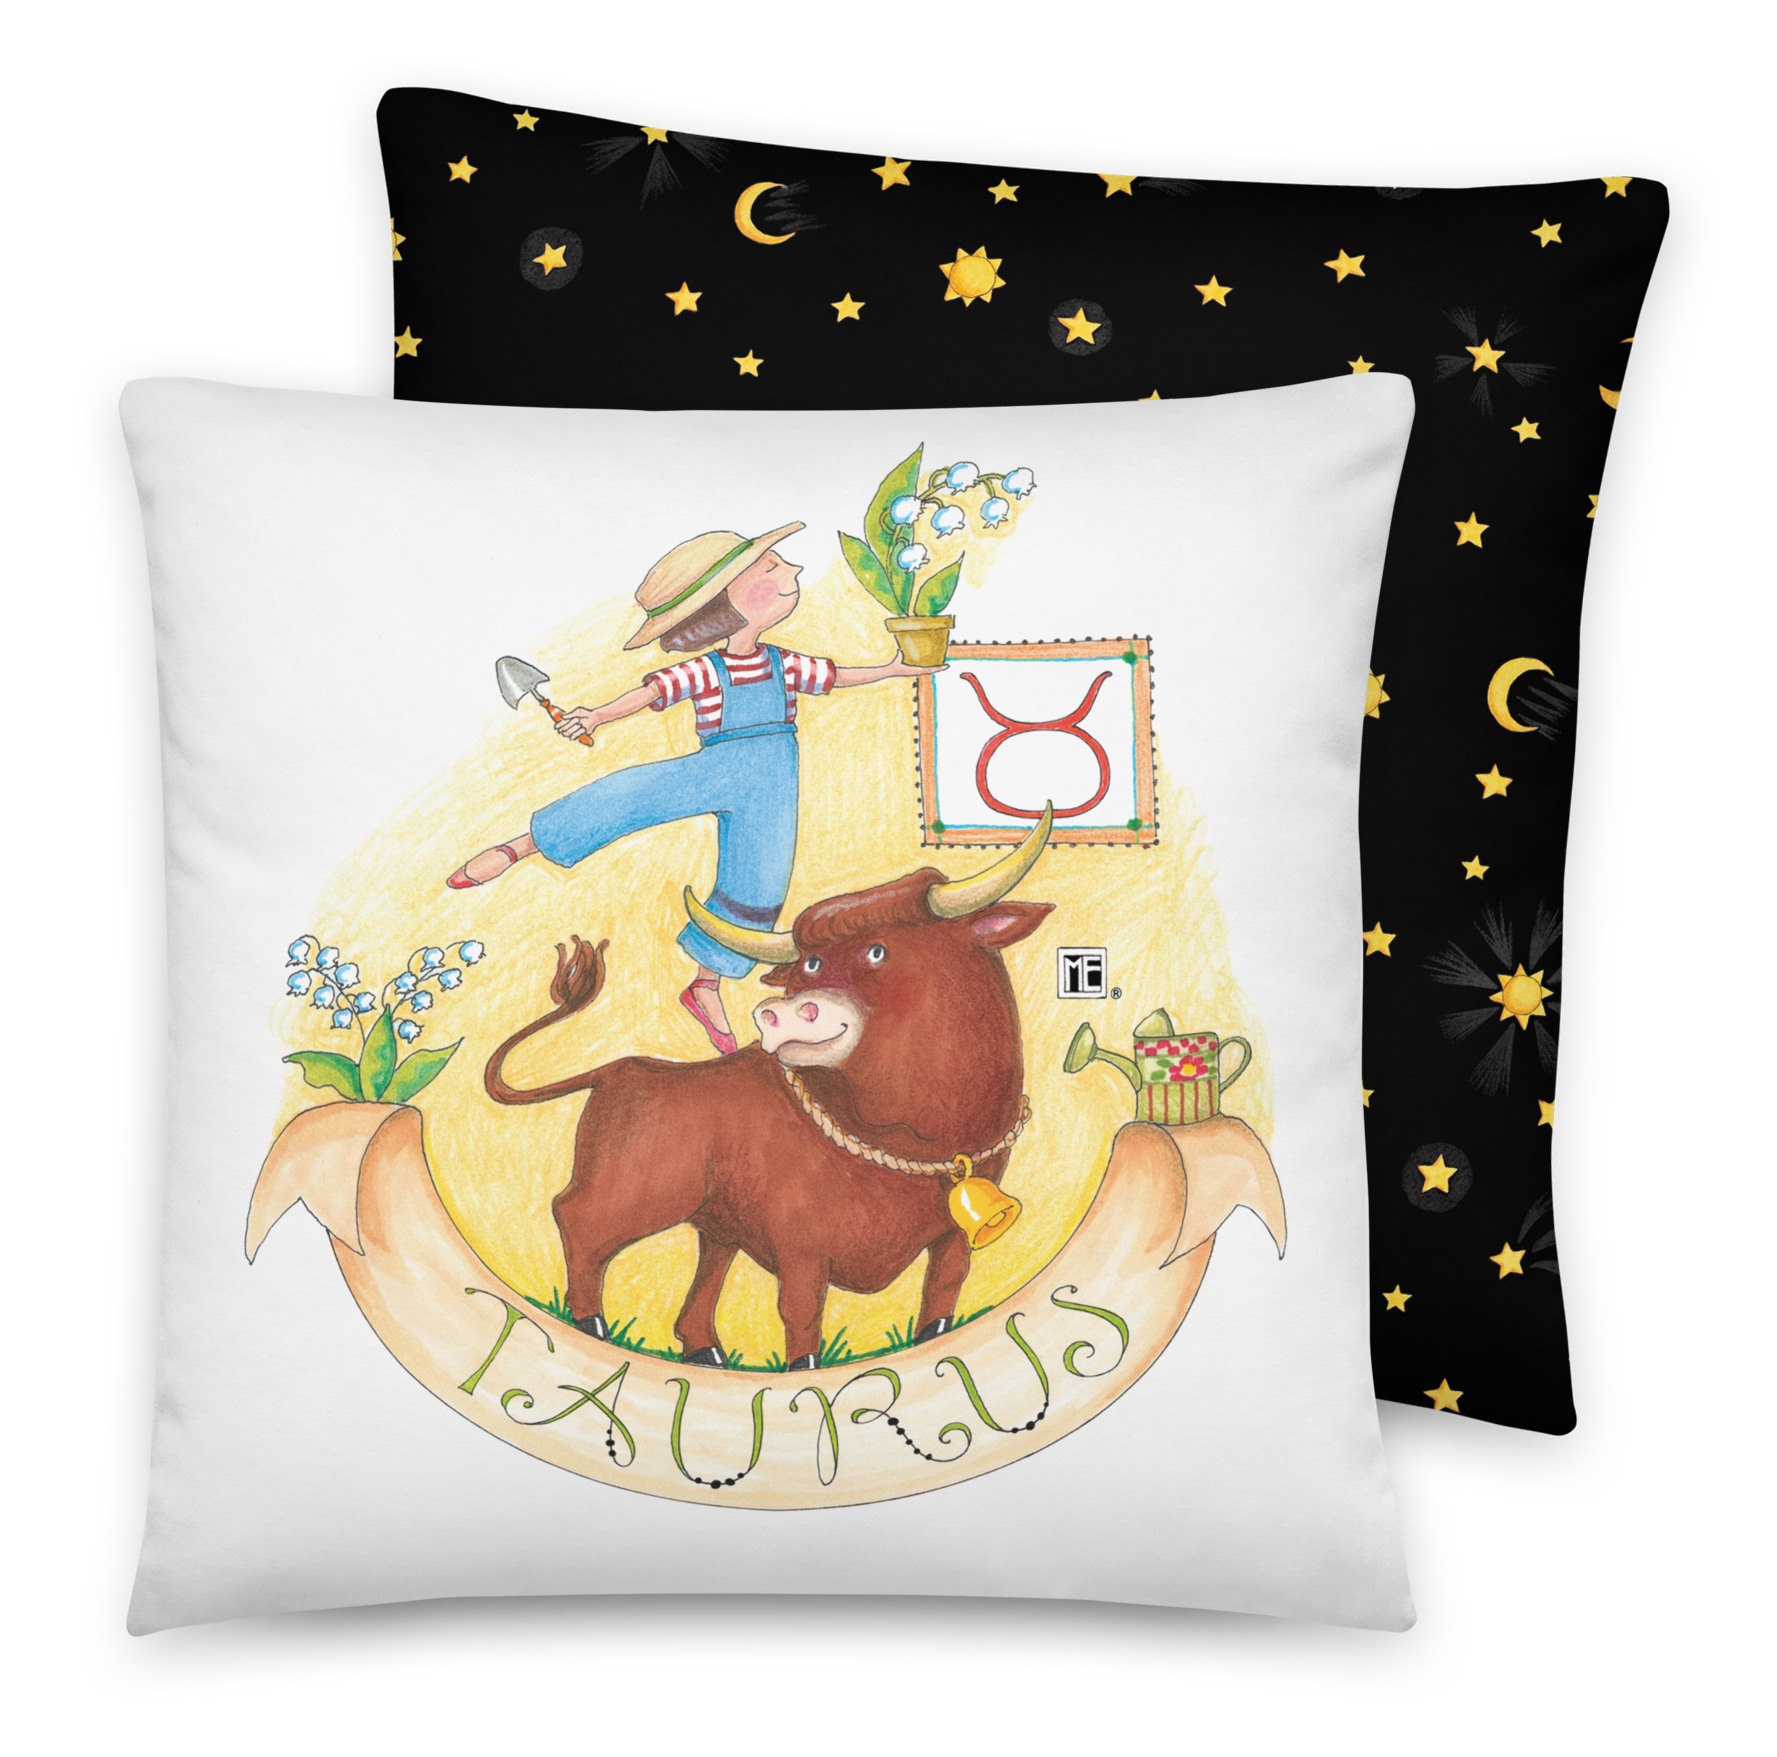 Taurus Pillow